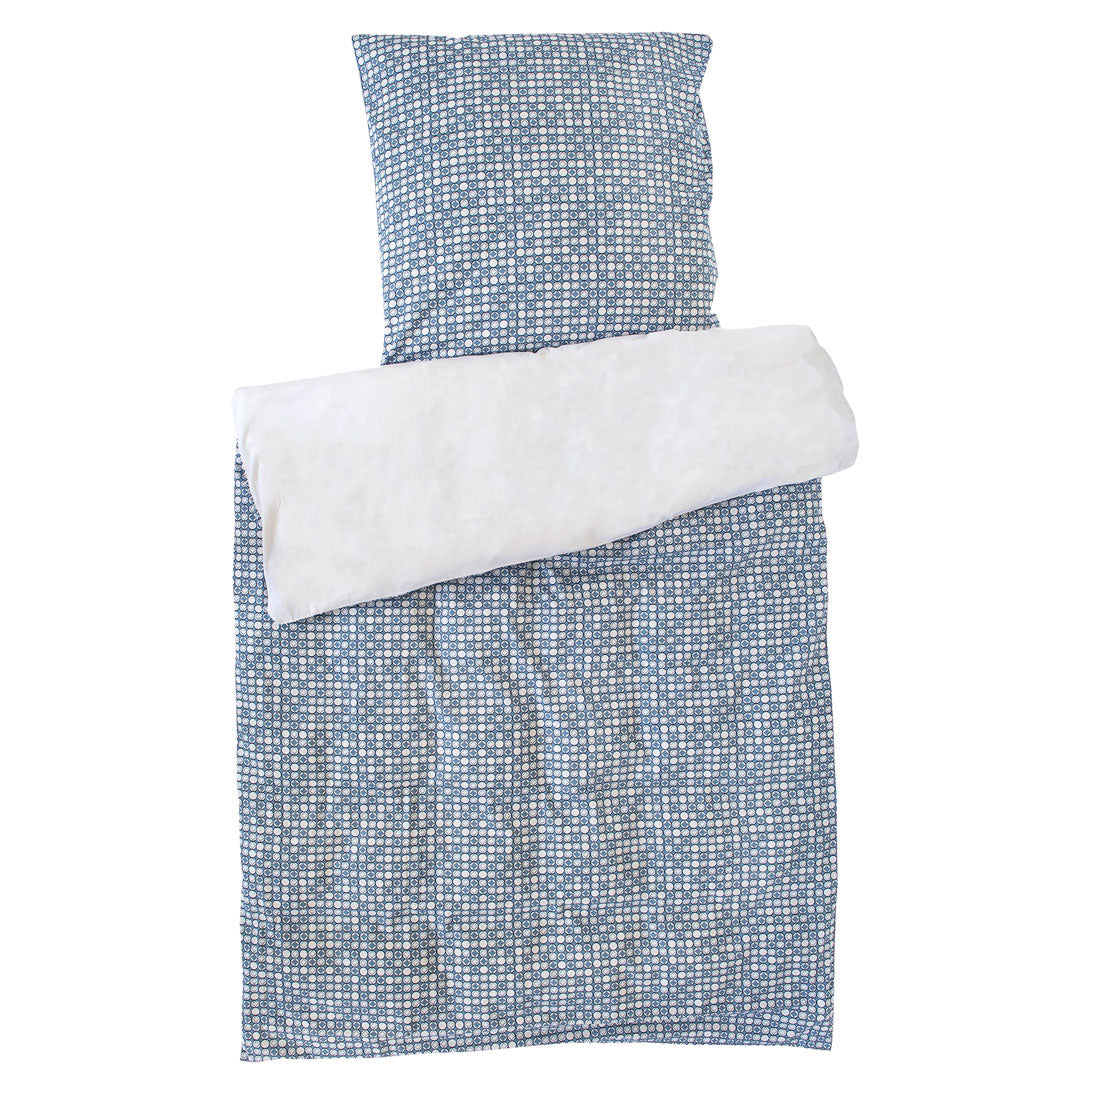 Cotton sateen bed linen white blue